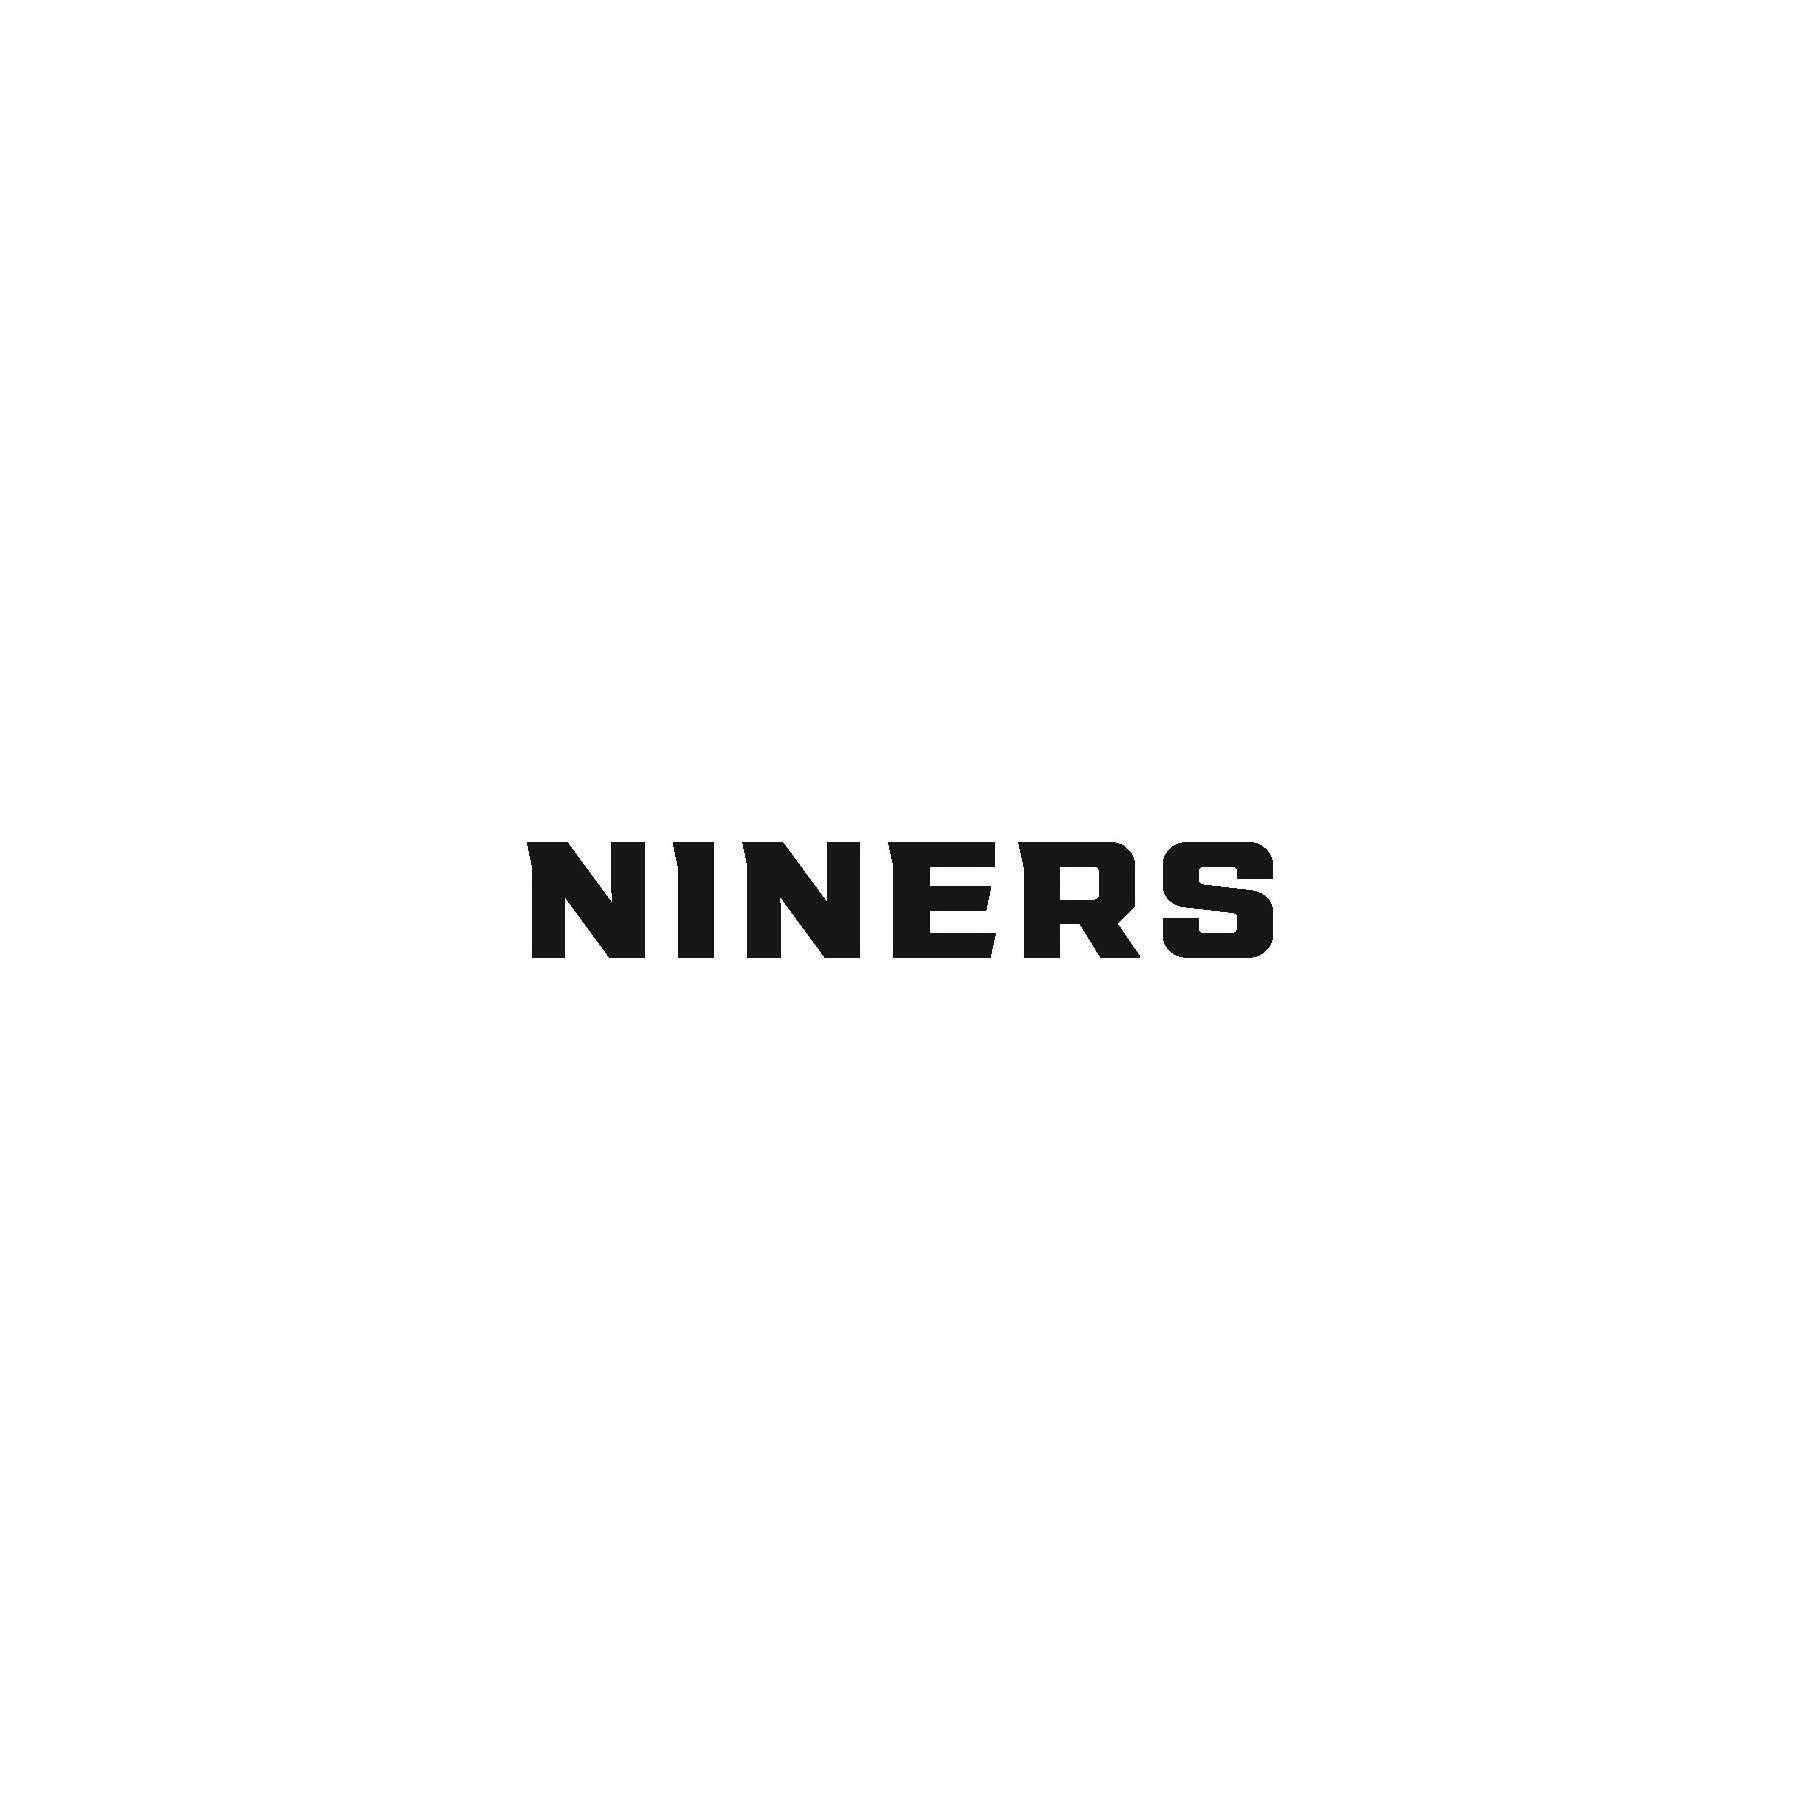  NINERS